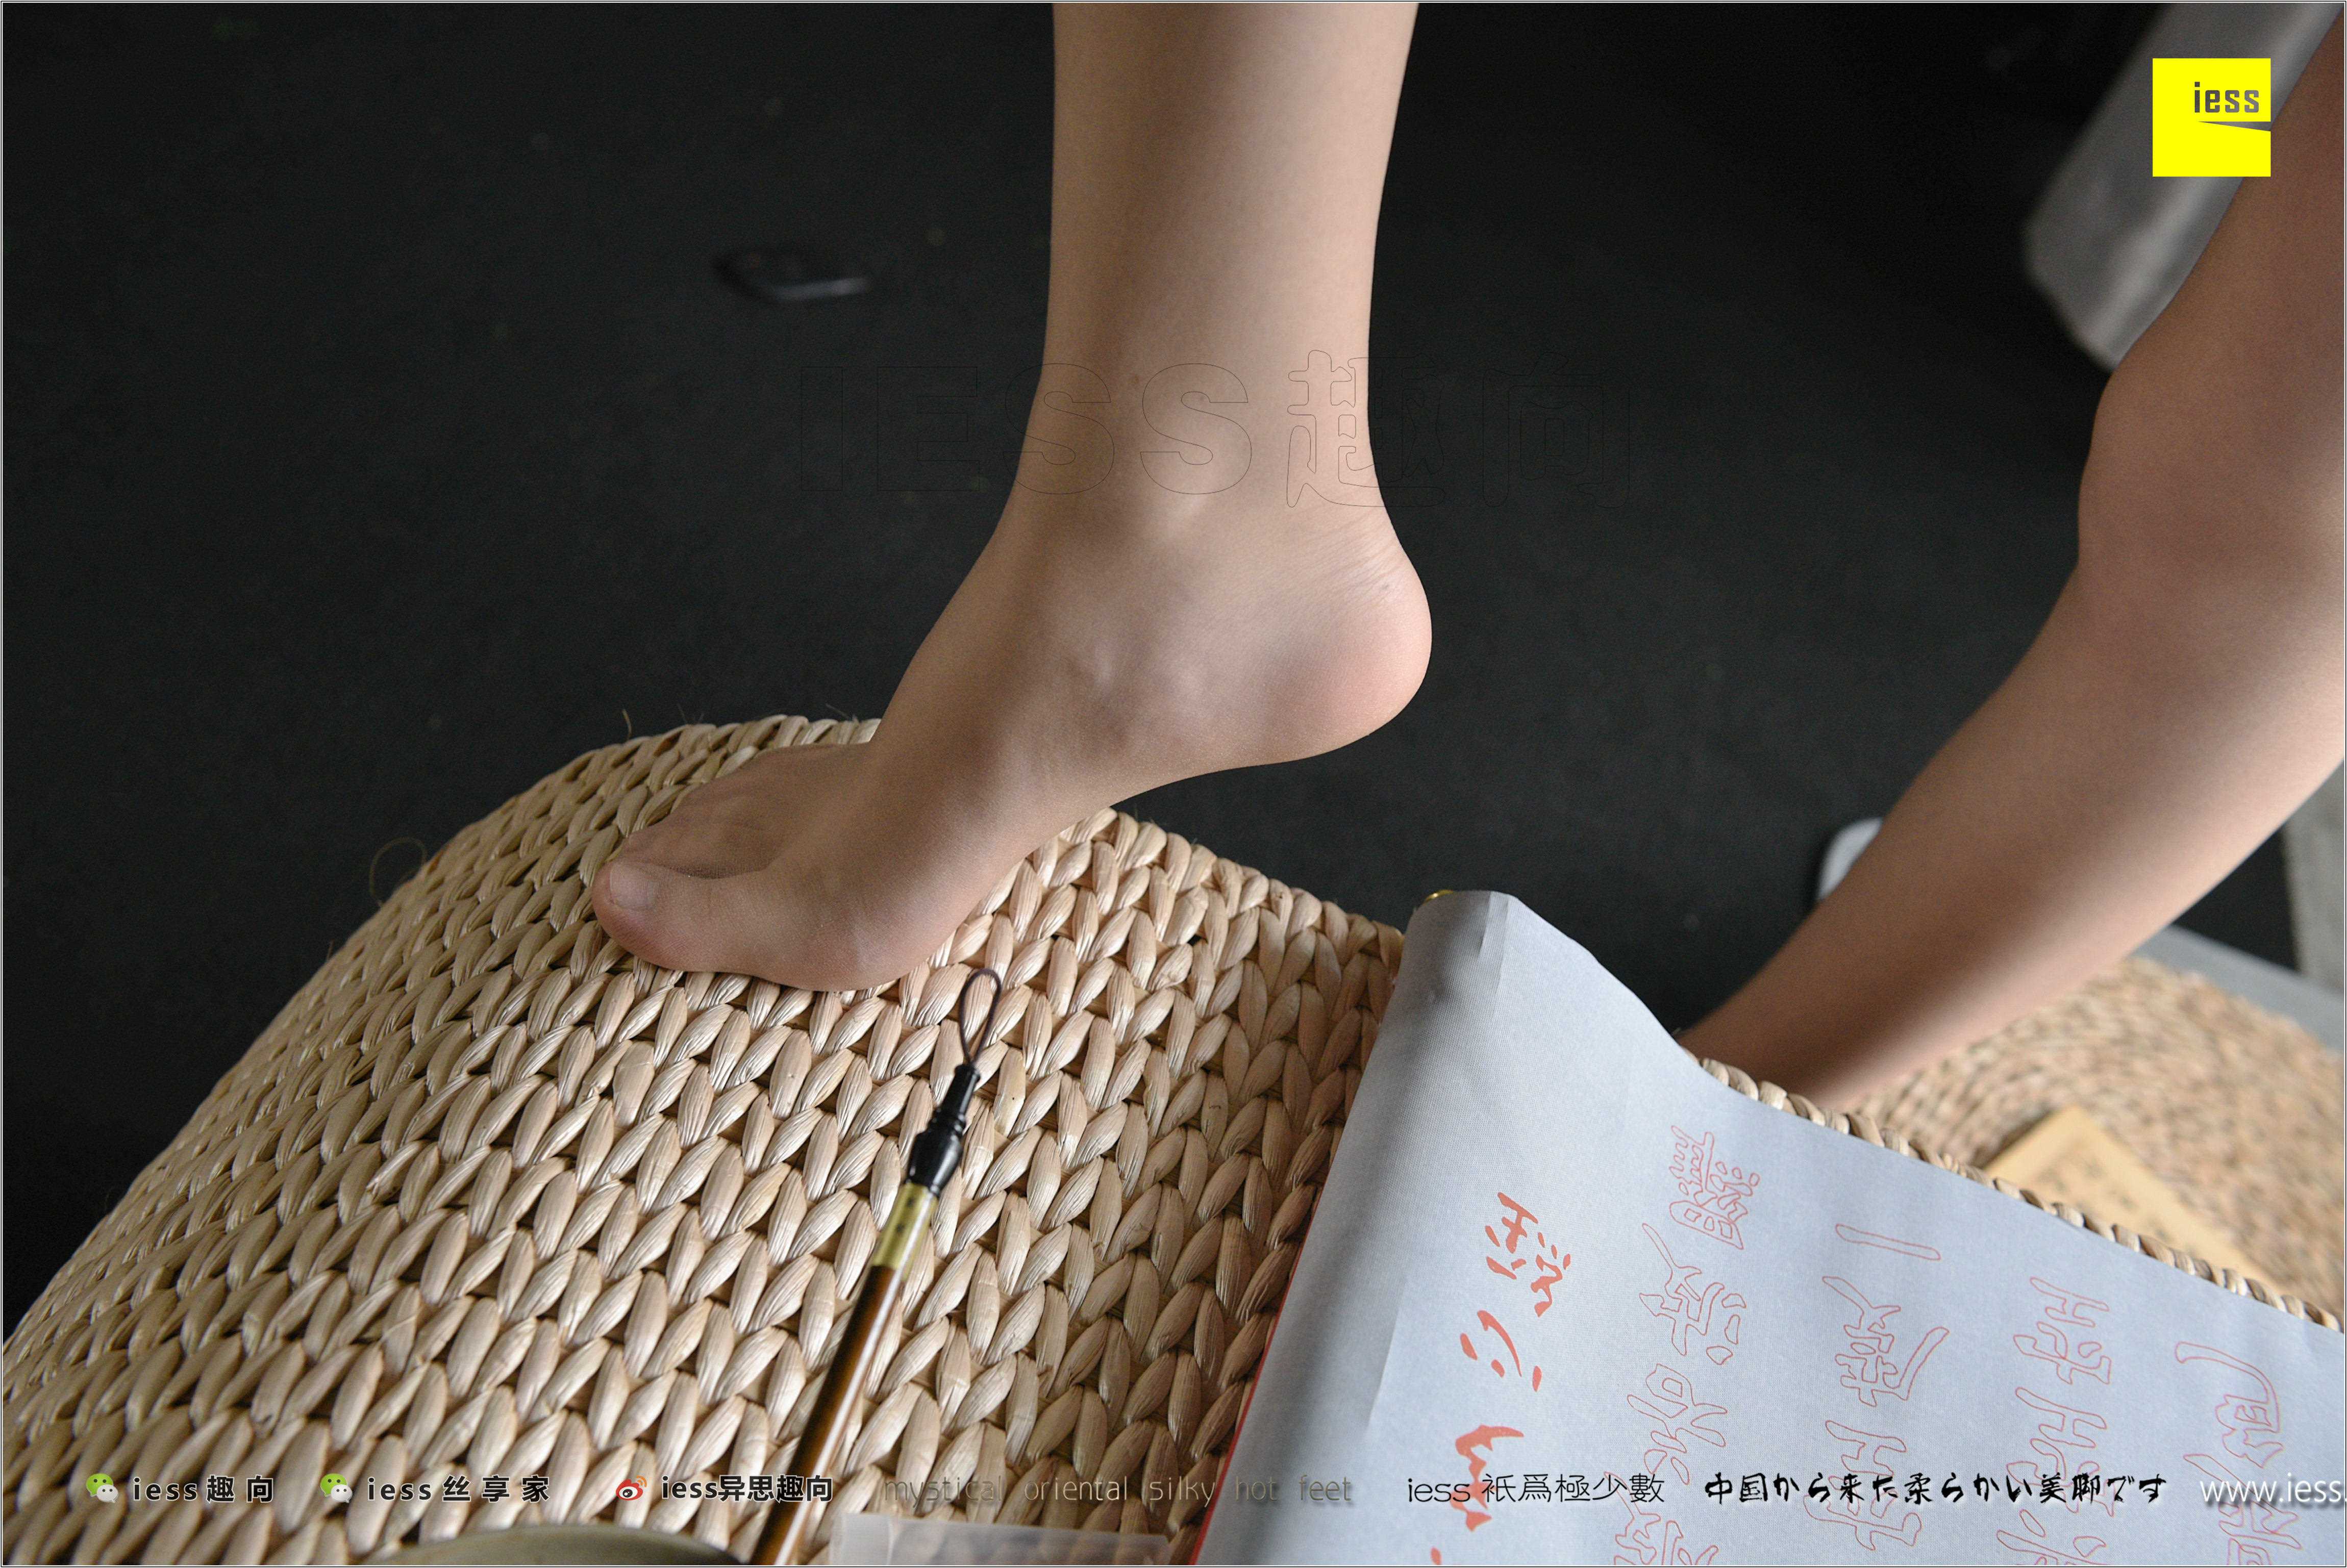 China Beauty Legs and feet 480